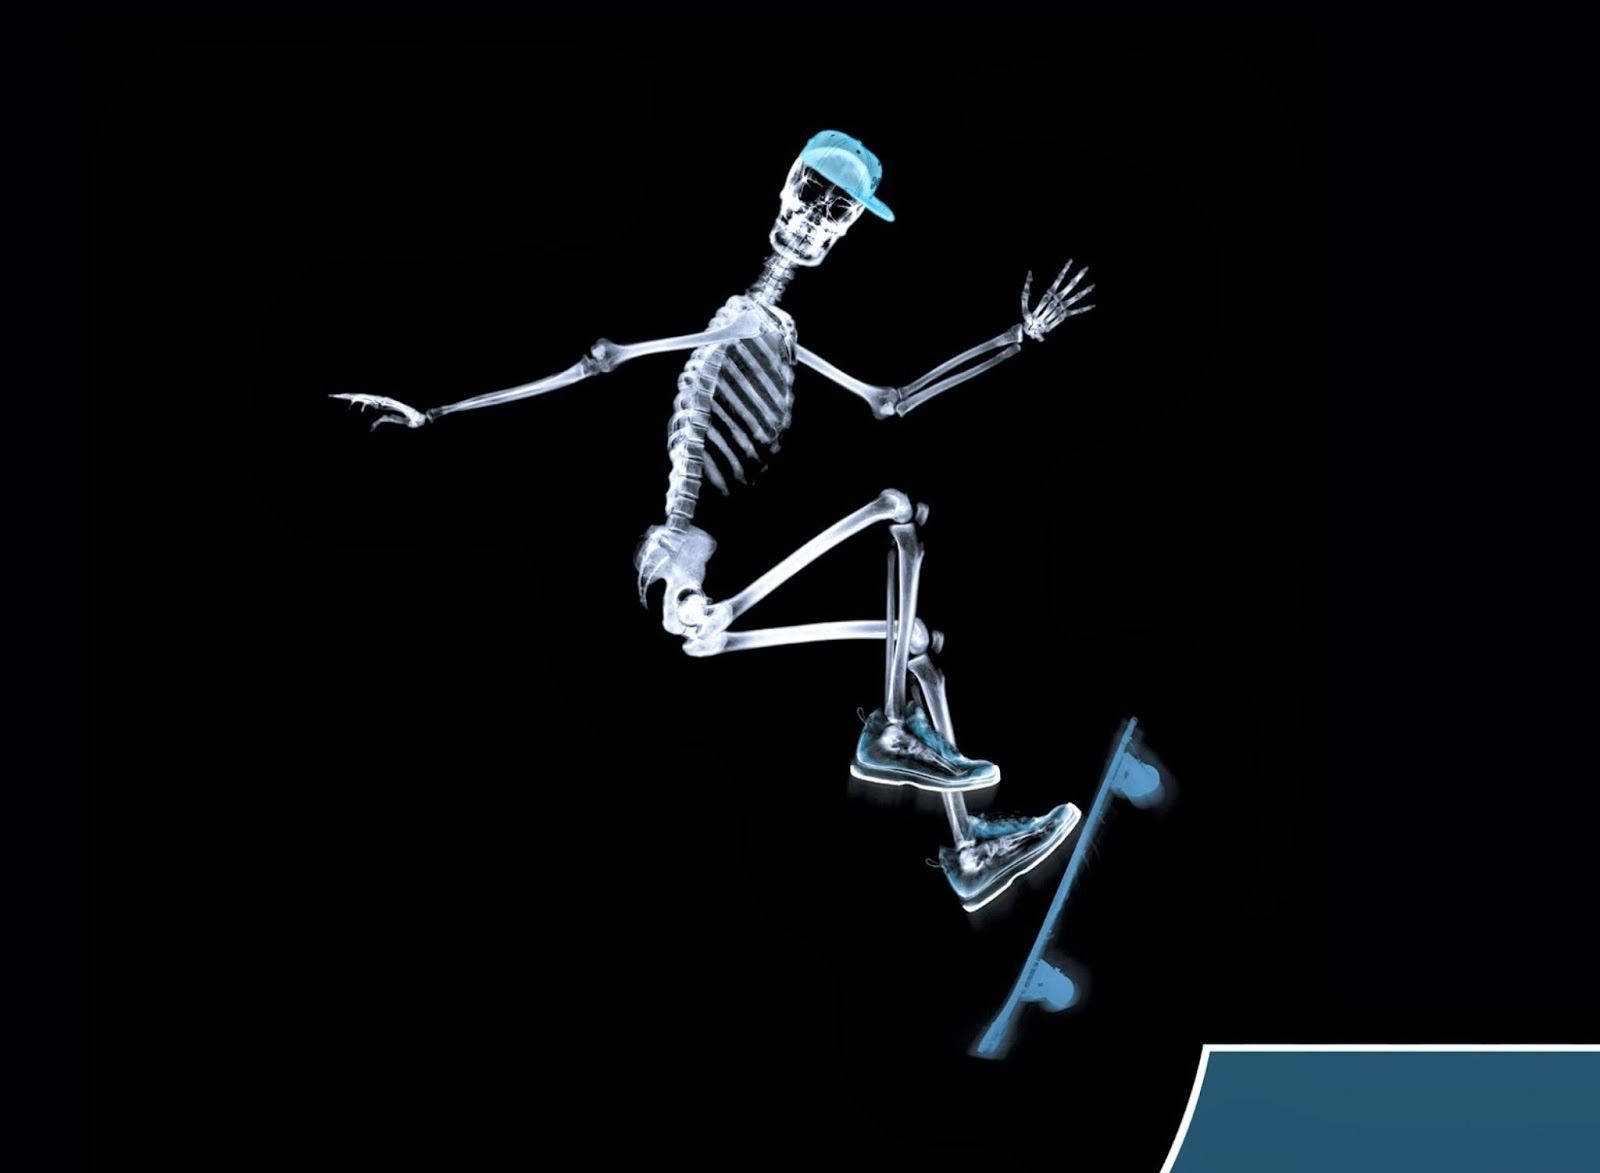 Skeleton Riding Skateboard Background